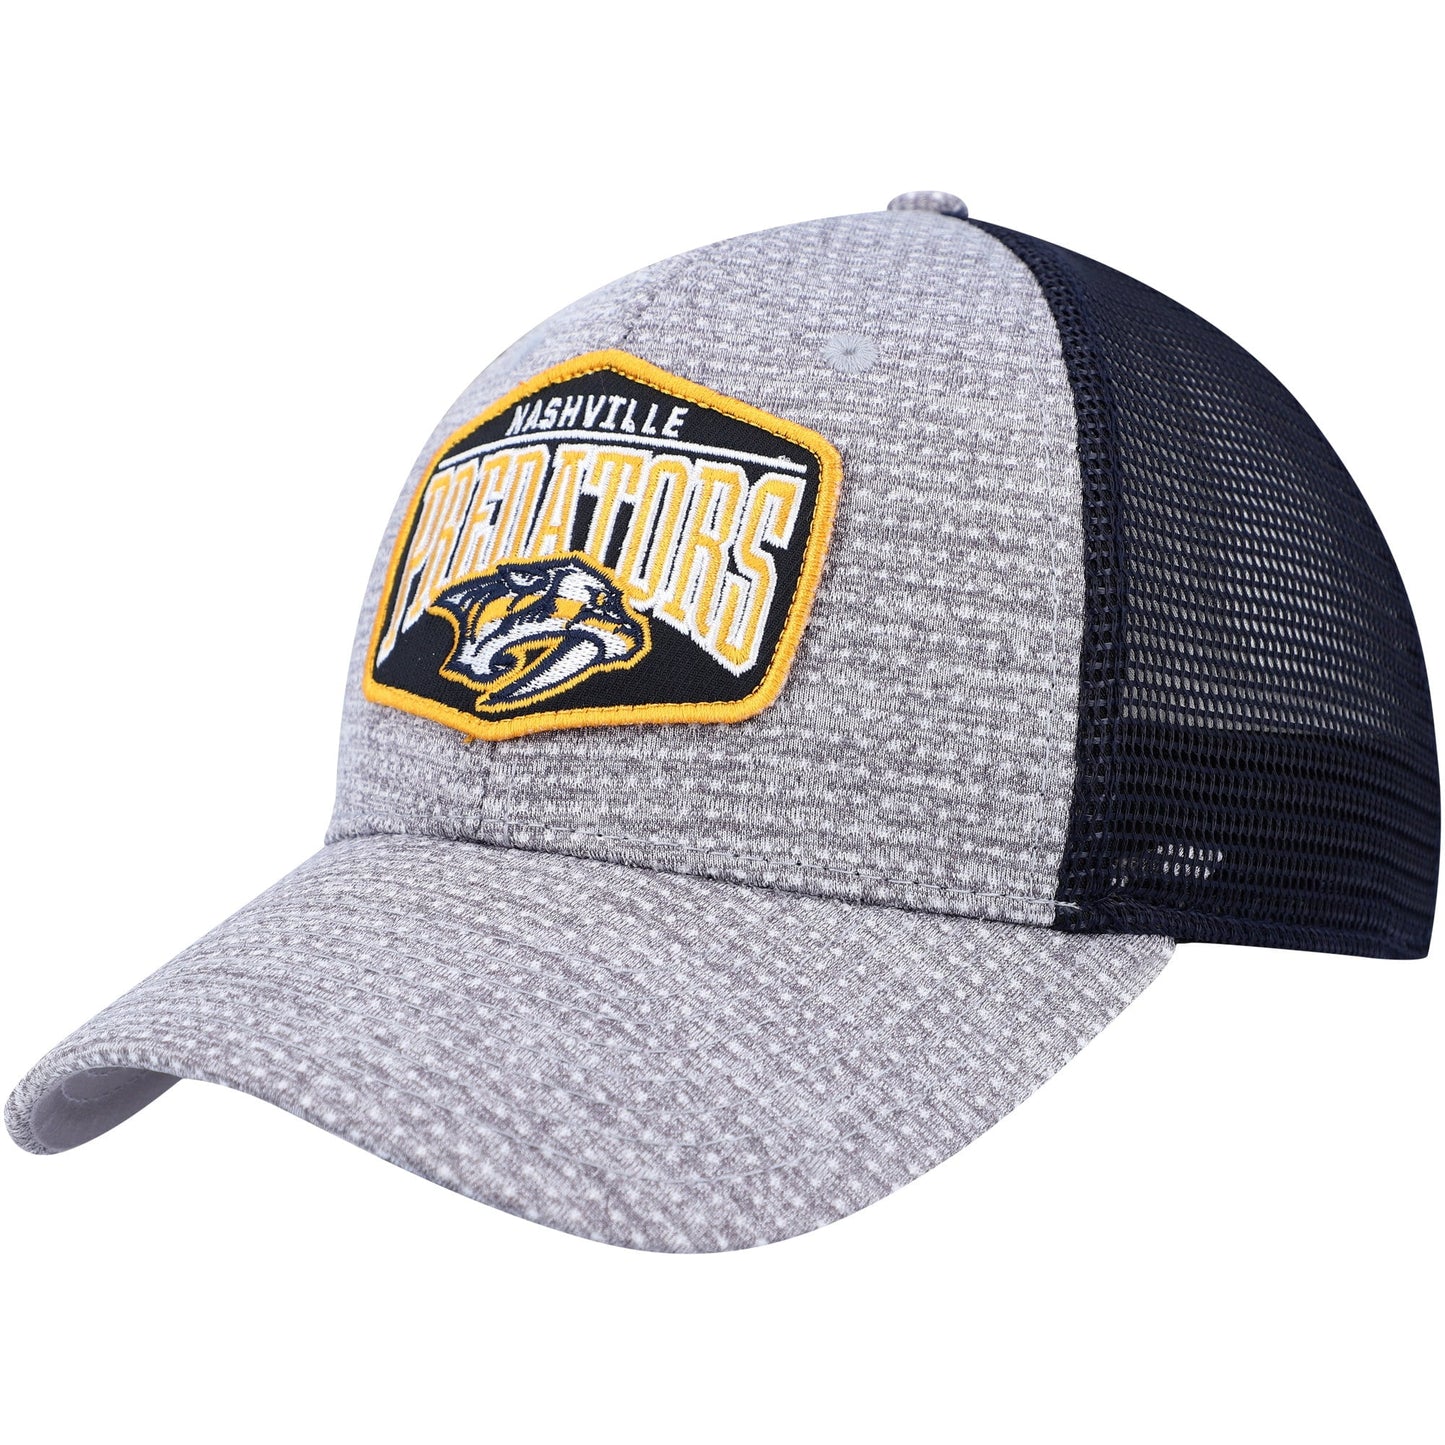 Men's Gray Nashville Predators Ridgeview Snapback Hat